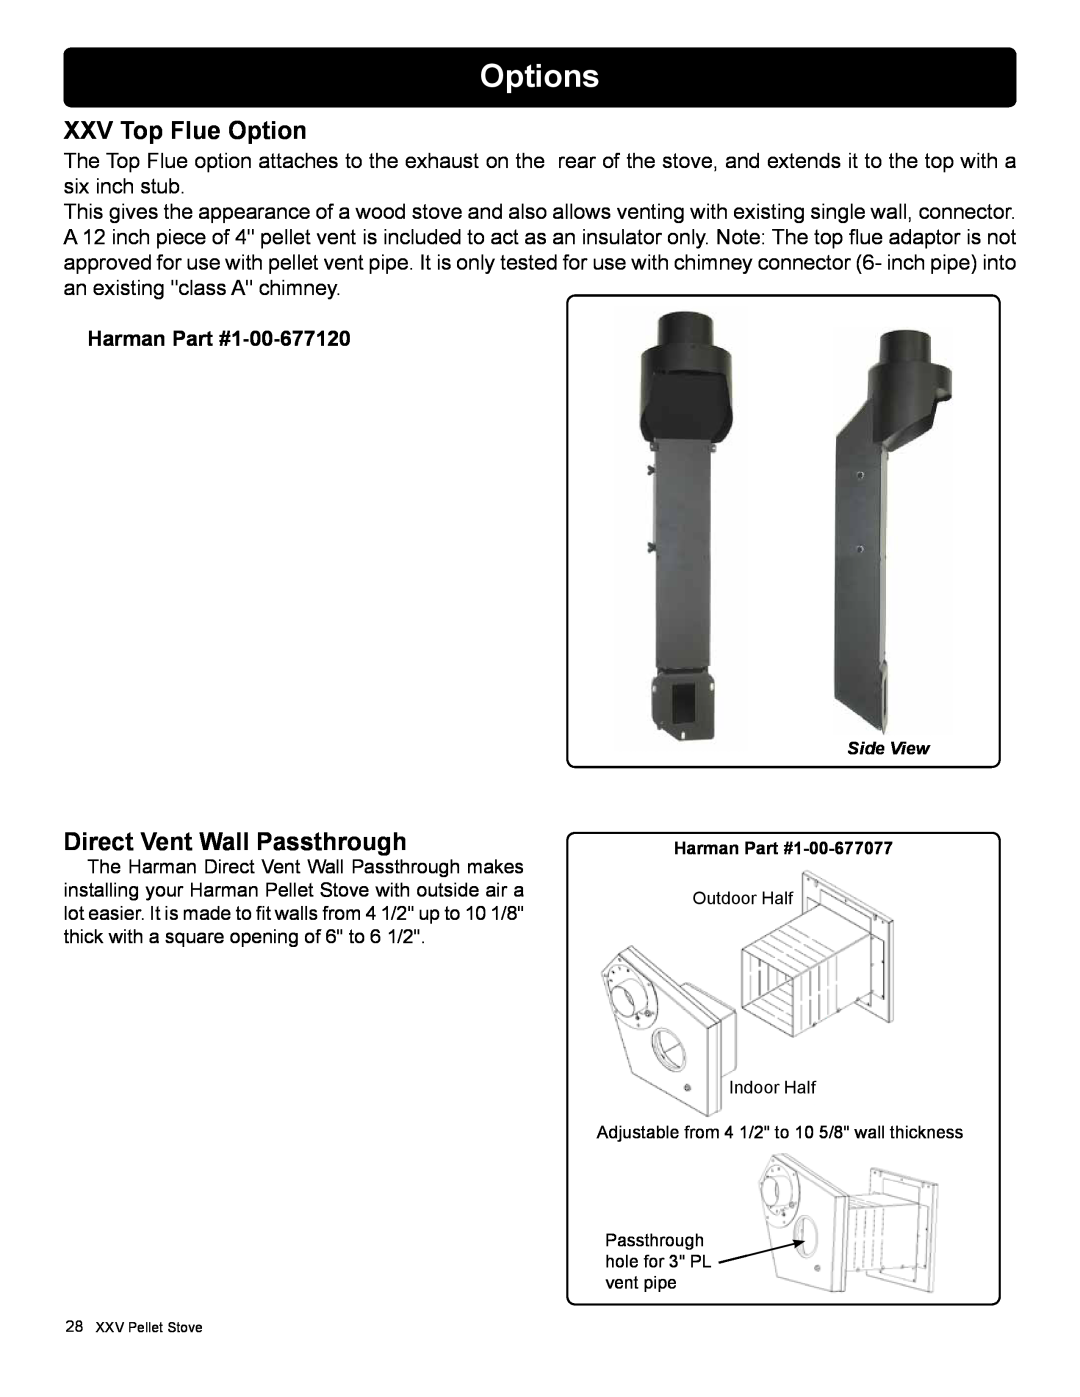 Harman Stove Company R16 manual Options, XXV Top Flue Option, Direct Vent Wall Passthrough 